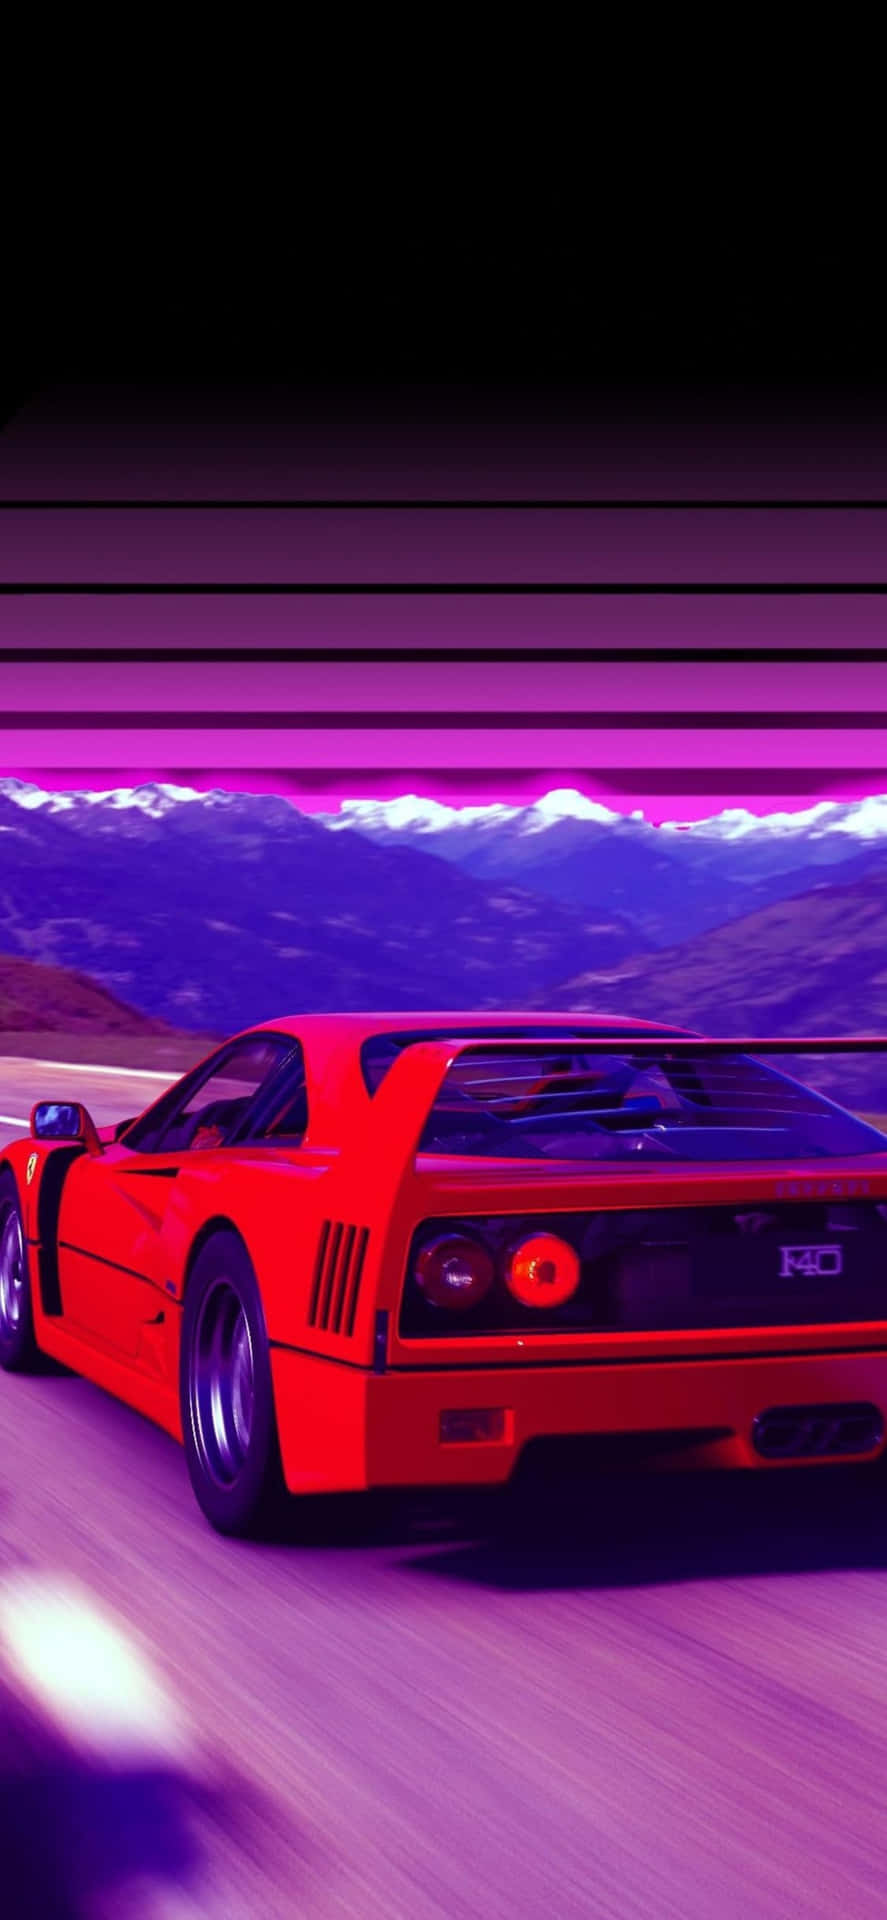 Iphonexs Max Ferrari Hintergrund, Rote Ferrari F40, Lila Hintergrundbild